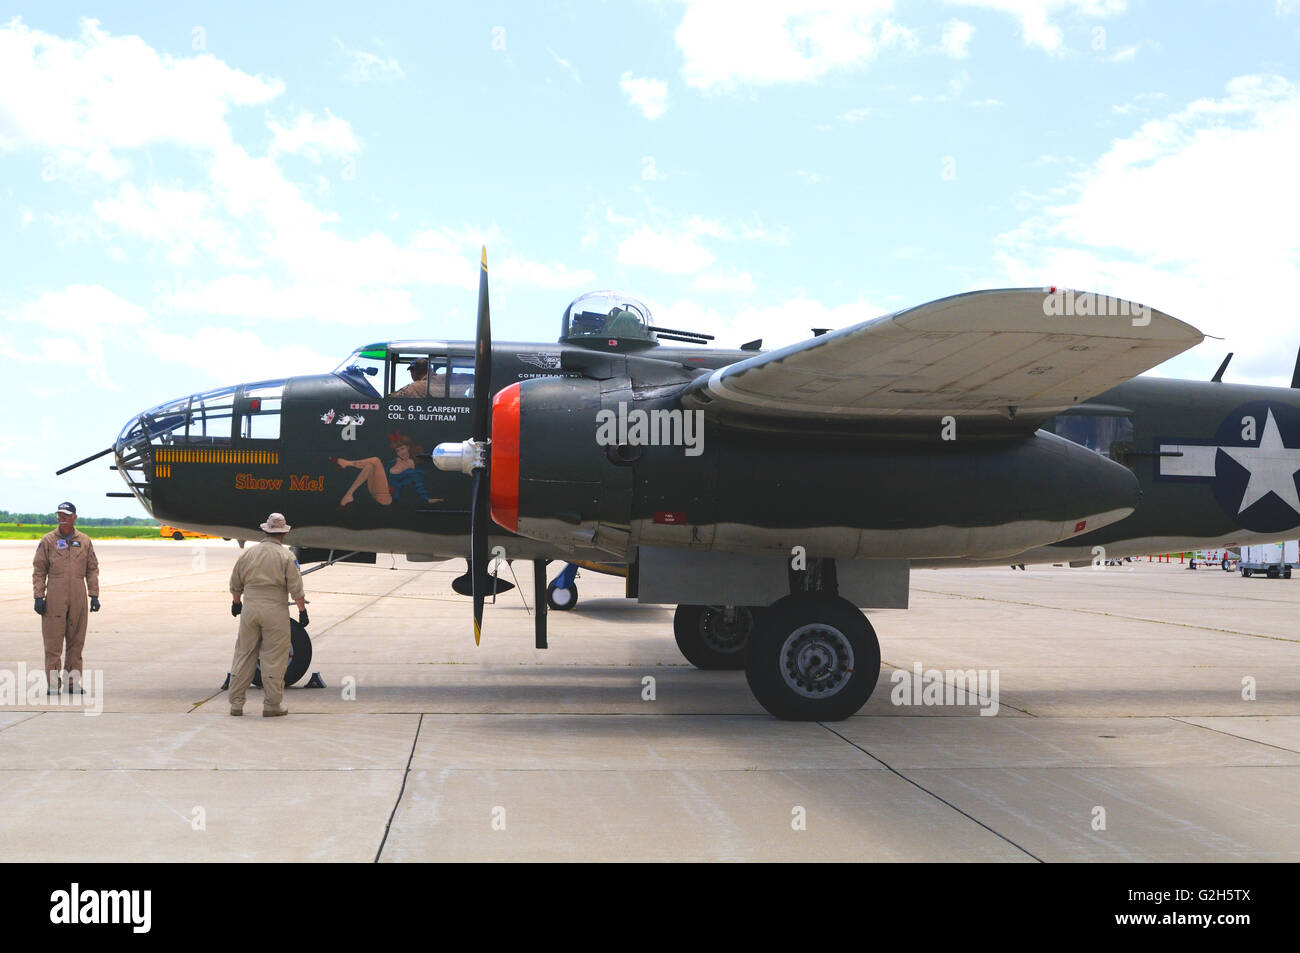 A World War II era B-25 light bomber with nose art displayed at an airshow Stock Photo